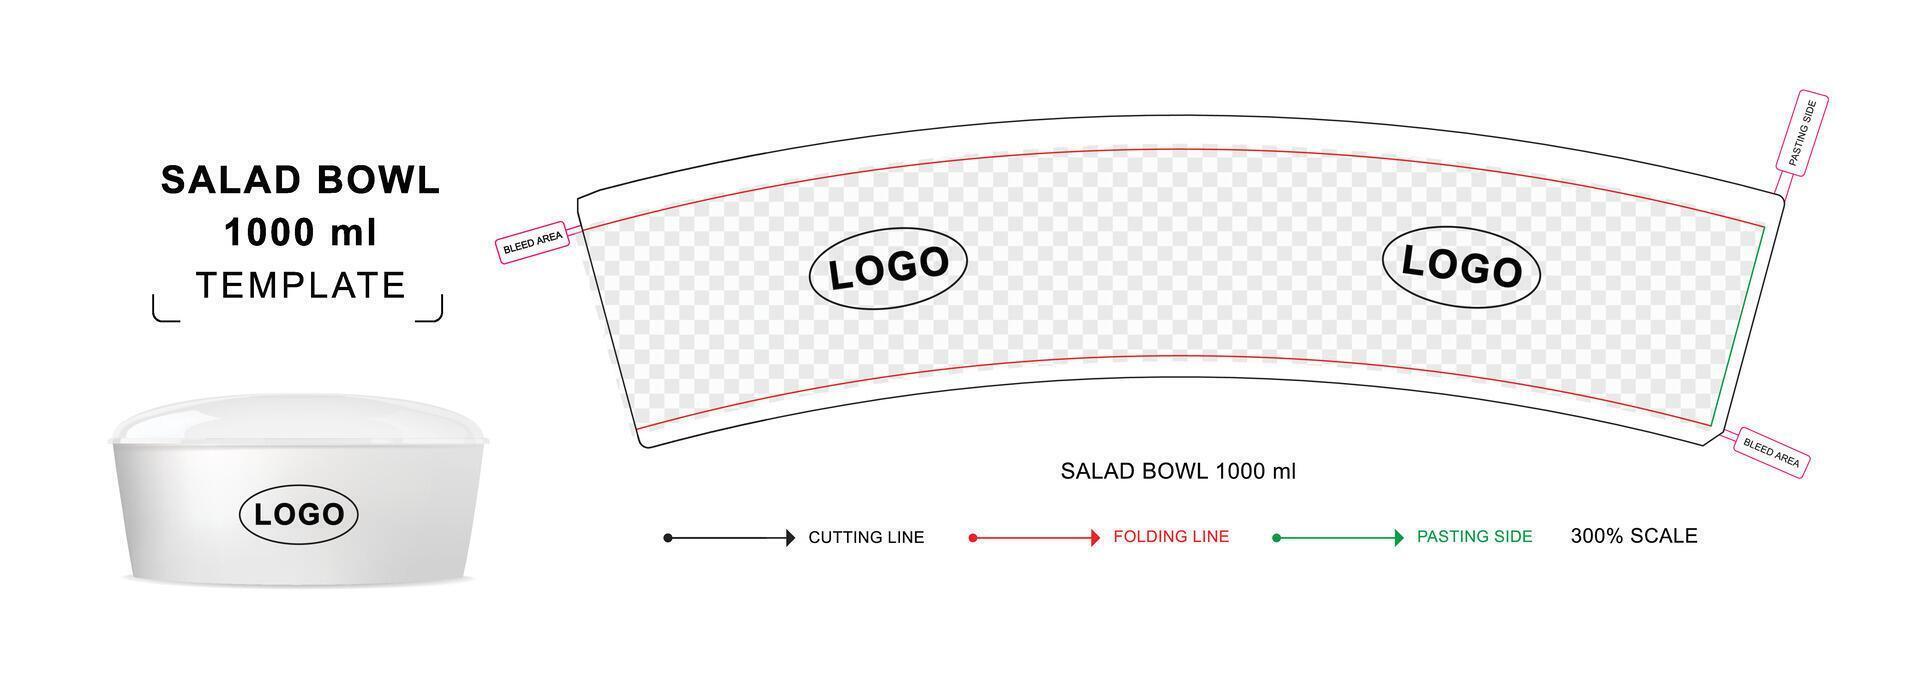 Salad Bowl die cut template for 1000 ml, Salad Bowl keyline vector